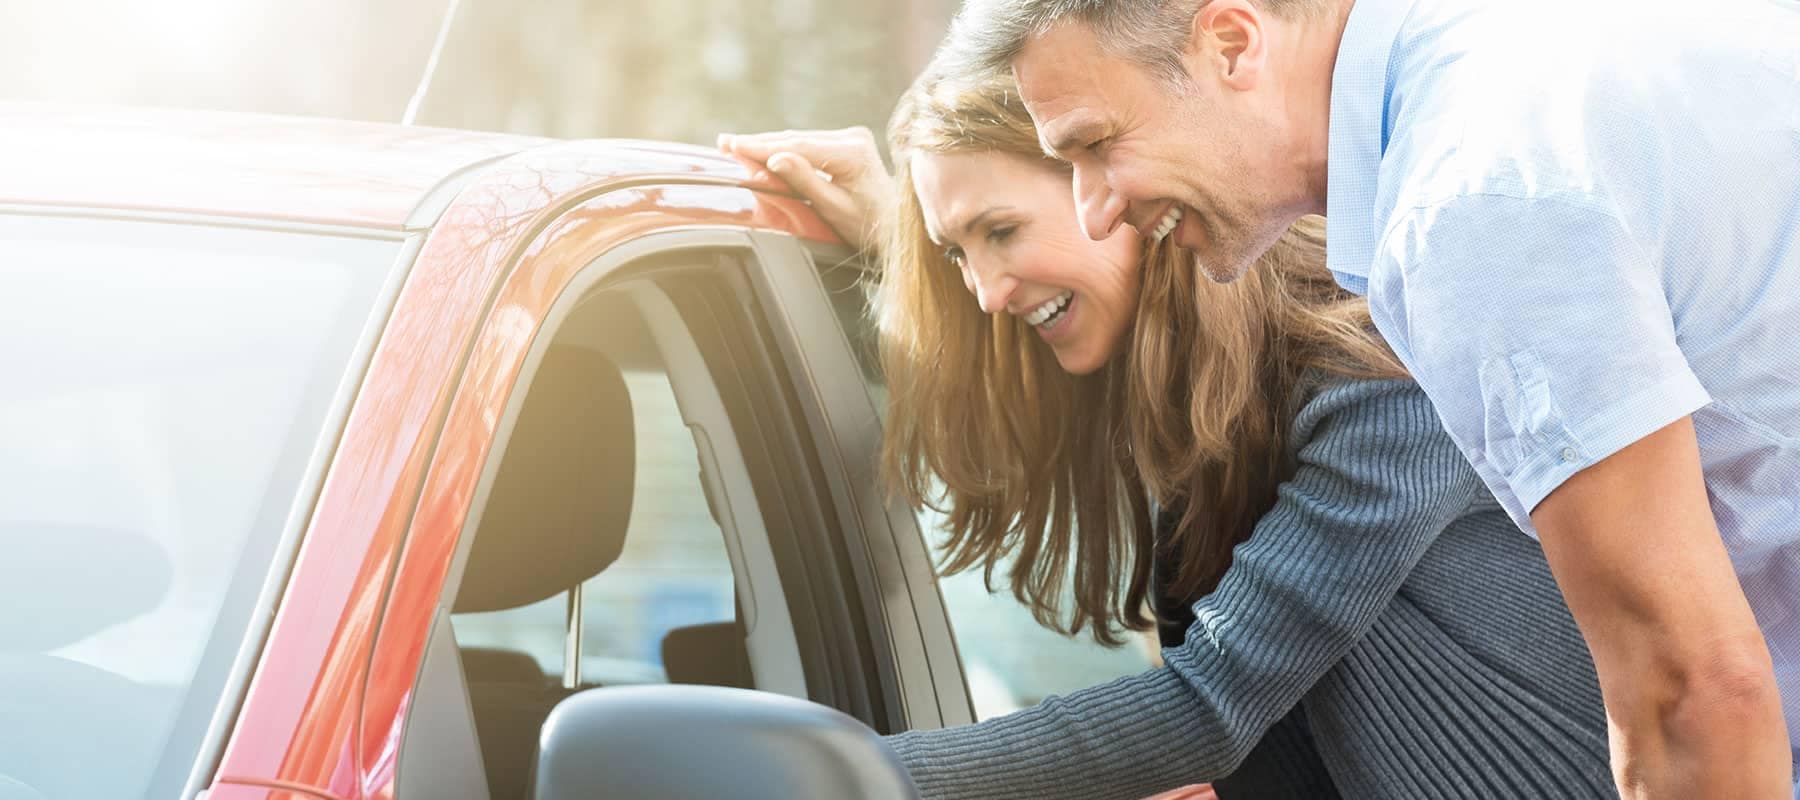 smiling couple examining a car